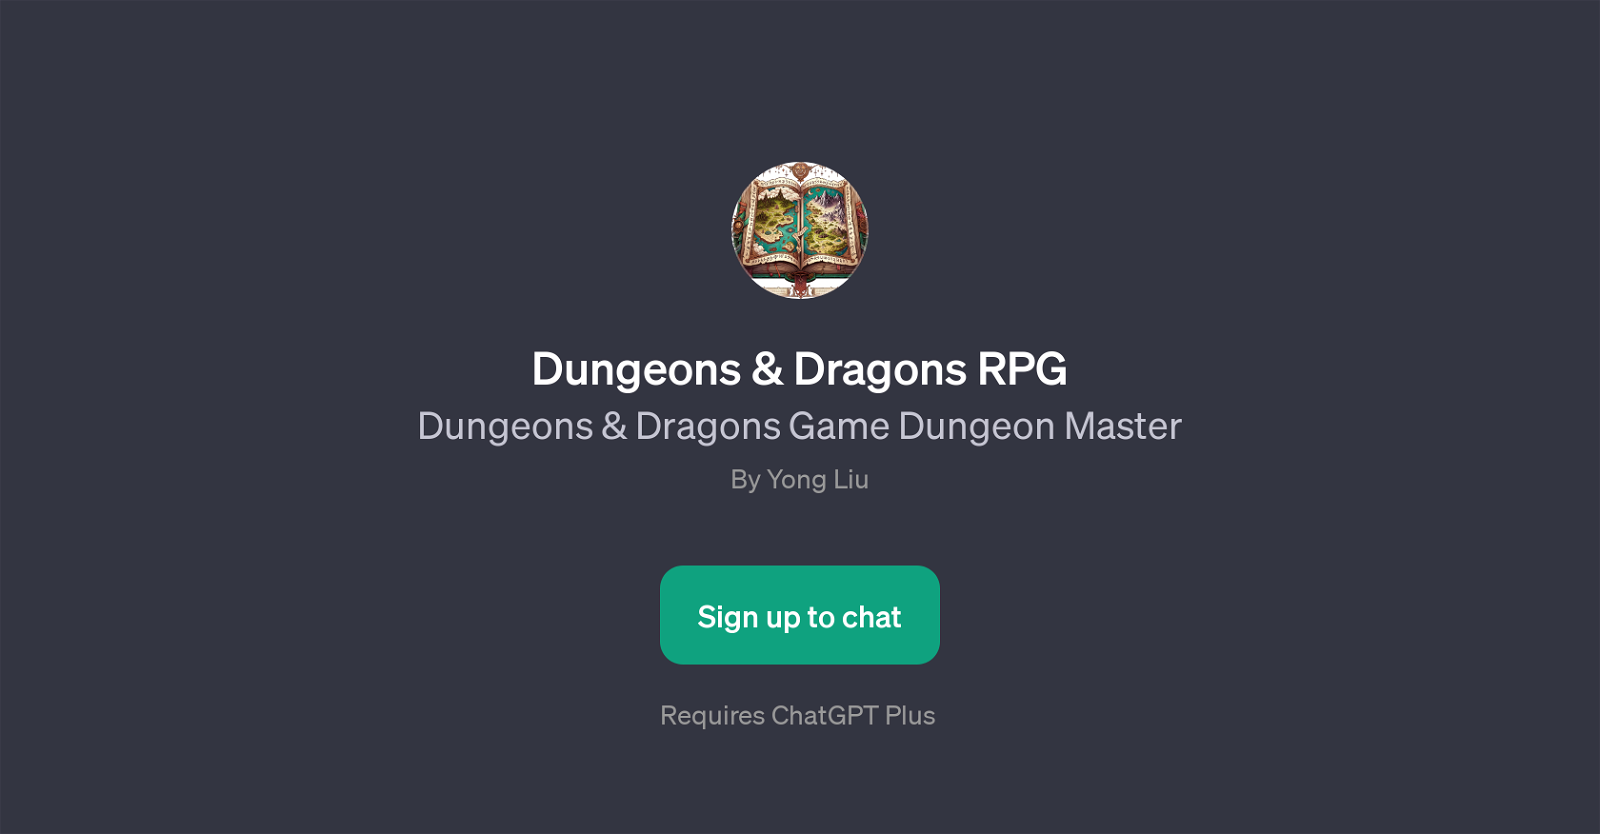 Dungeons & Dragons RPG GPT website